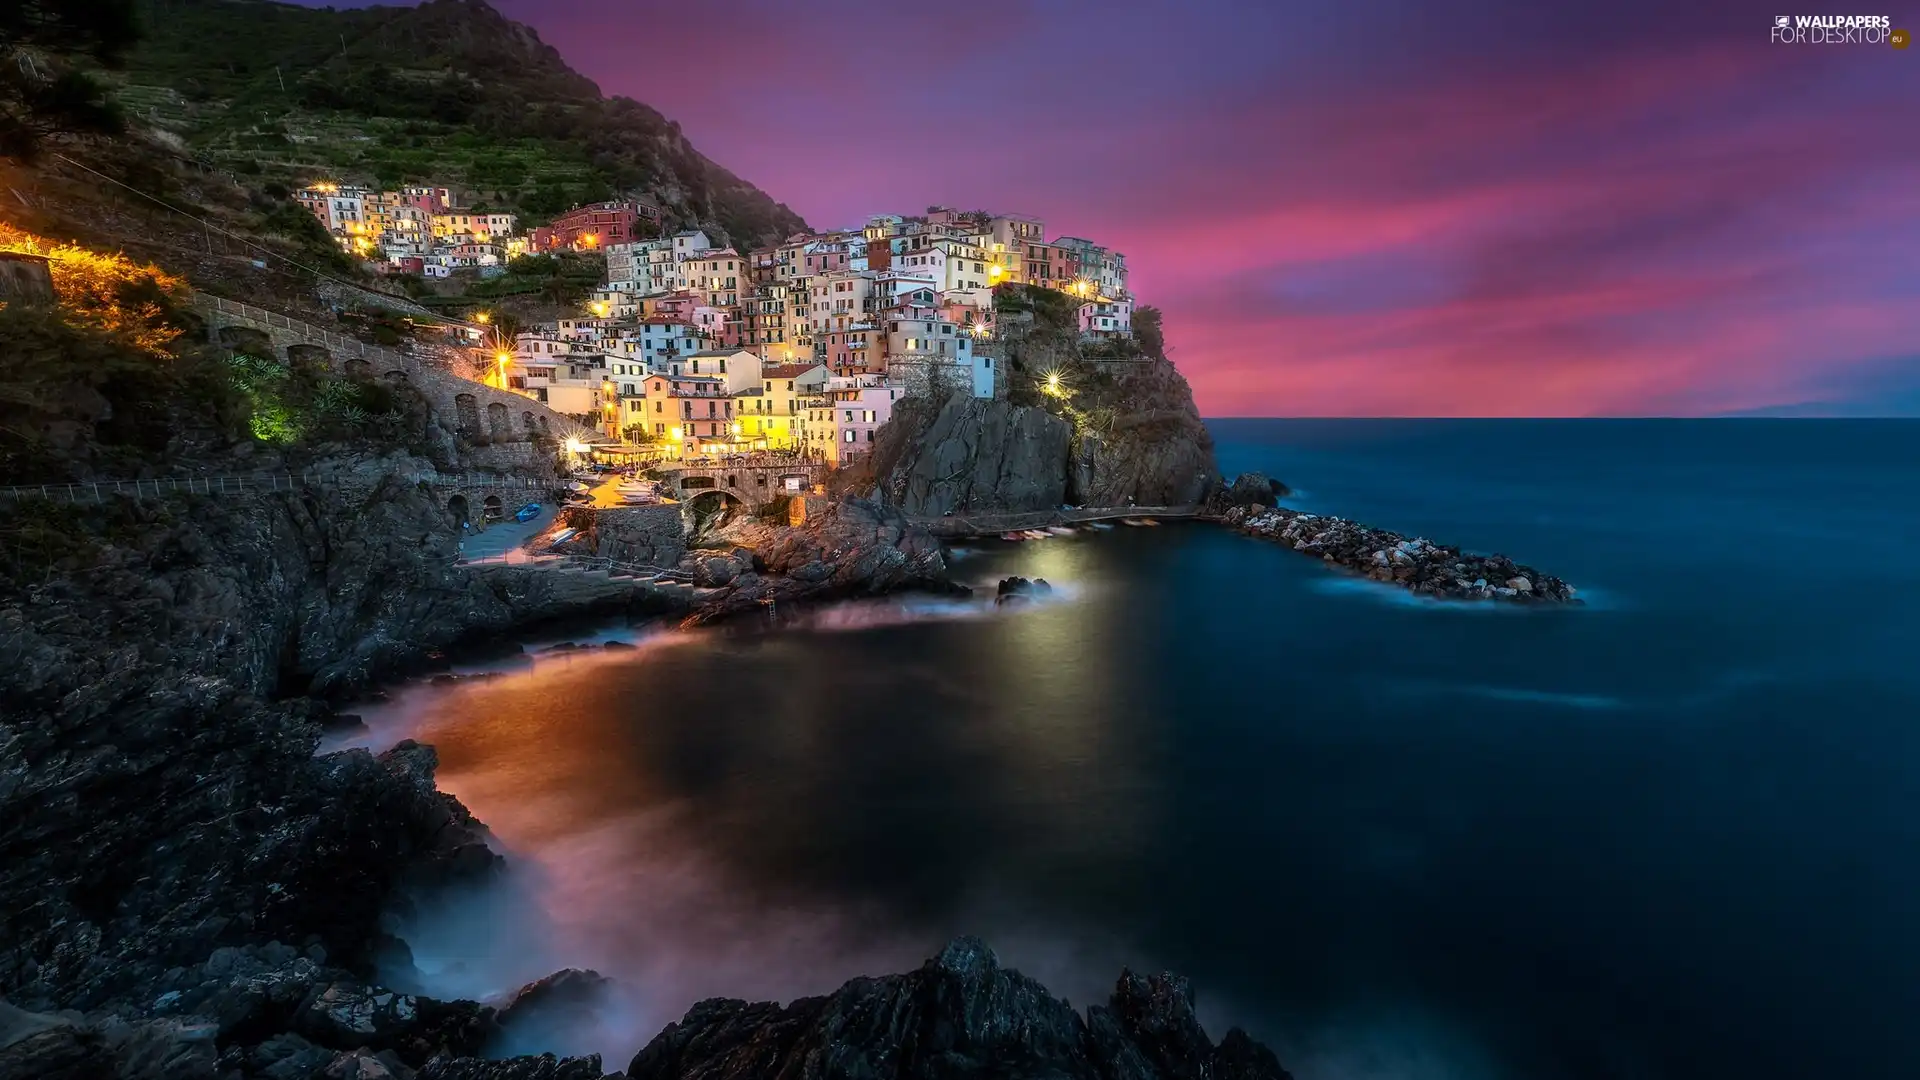 rocks, Houses, creek, City of Manarola, Riomaggiore Municipality, light, color, Italy, Night, Ligurian Sea, Region of Liguria, Province of La Spezia